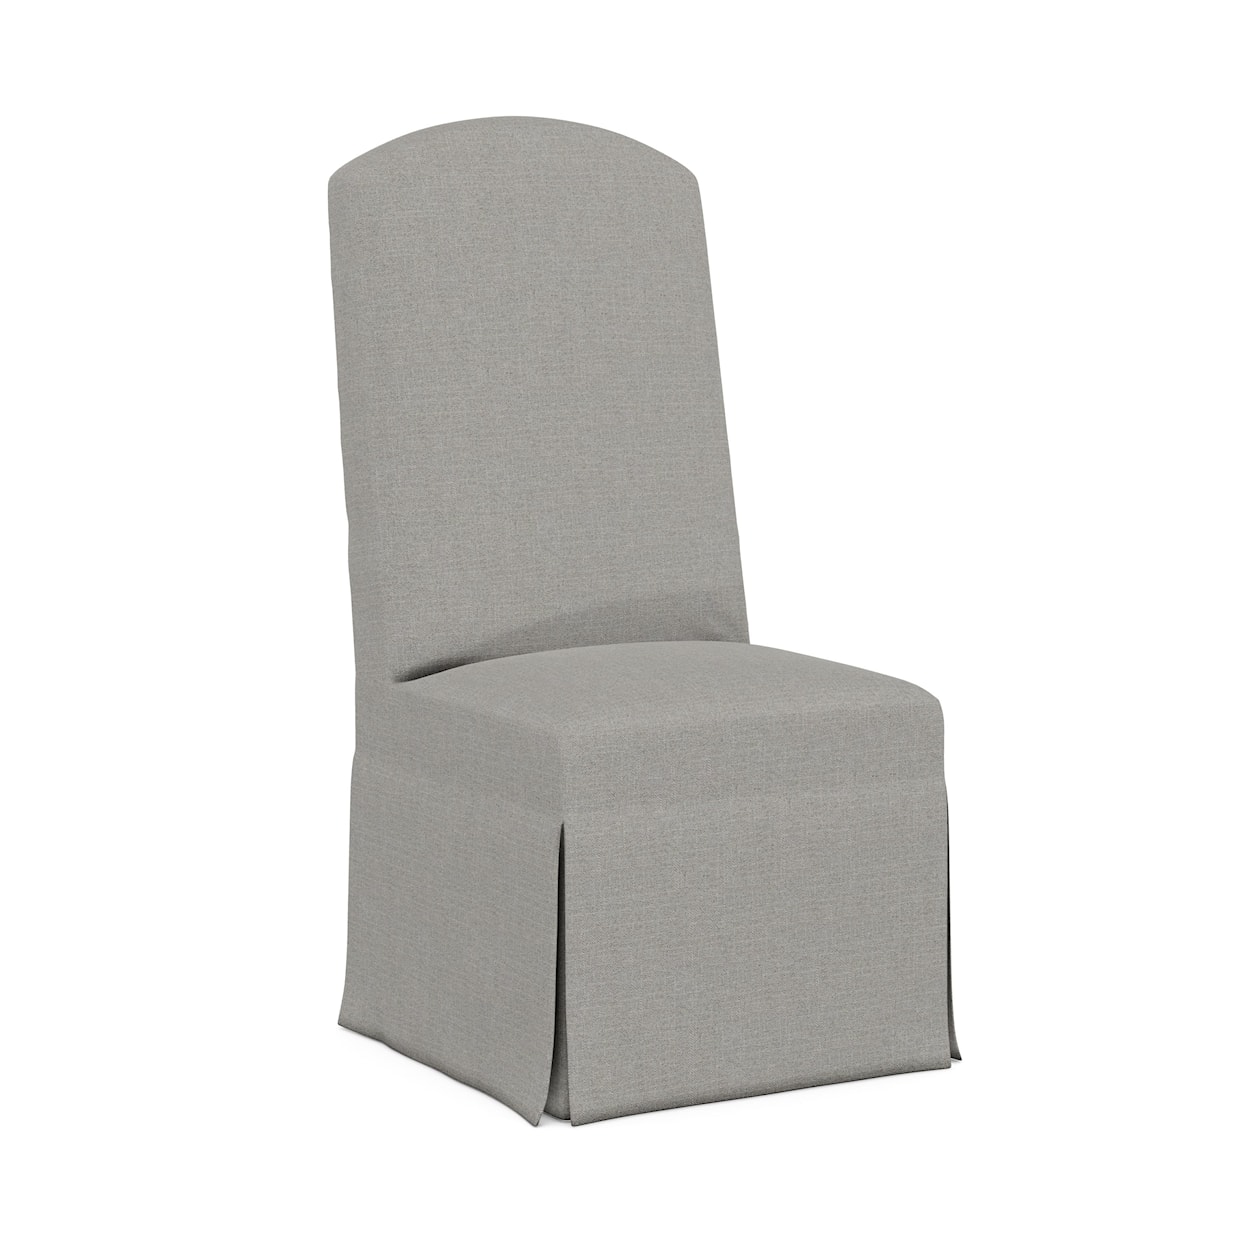 John Thomas Americana Aubree Slip Cover Chair